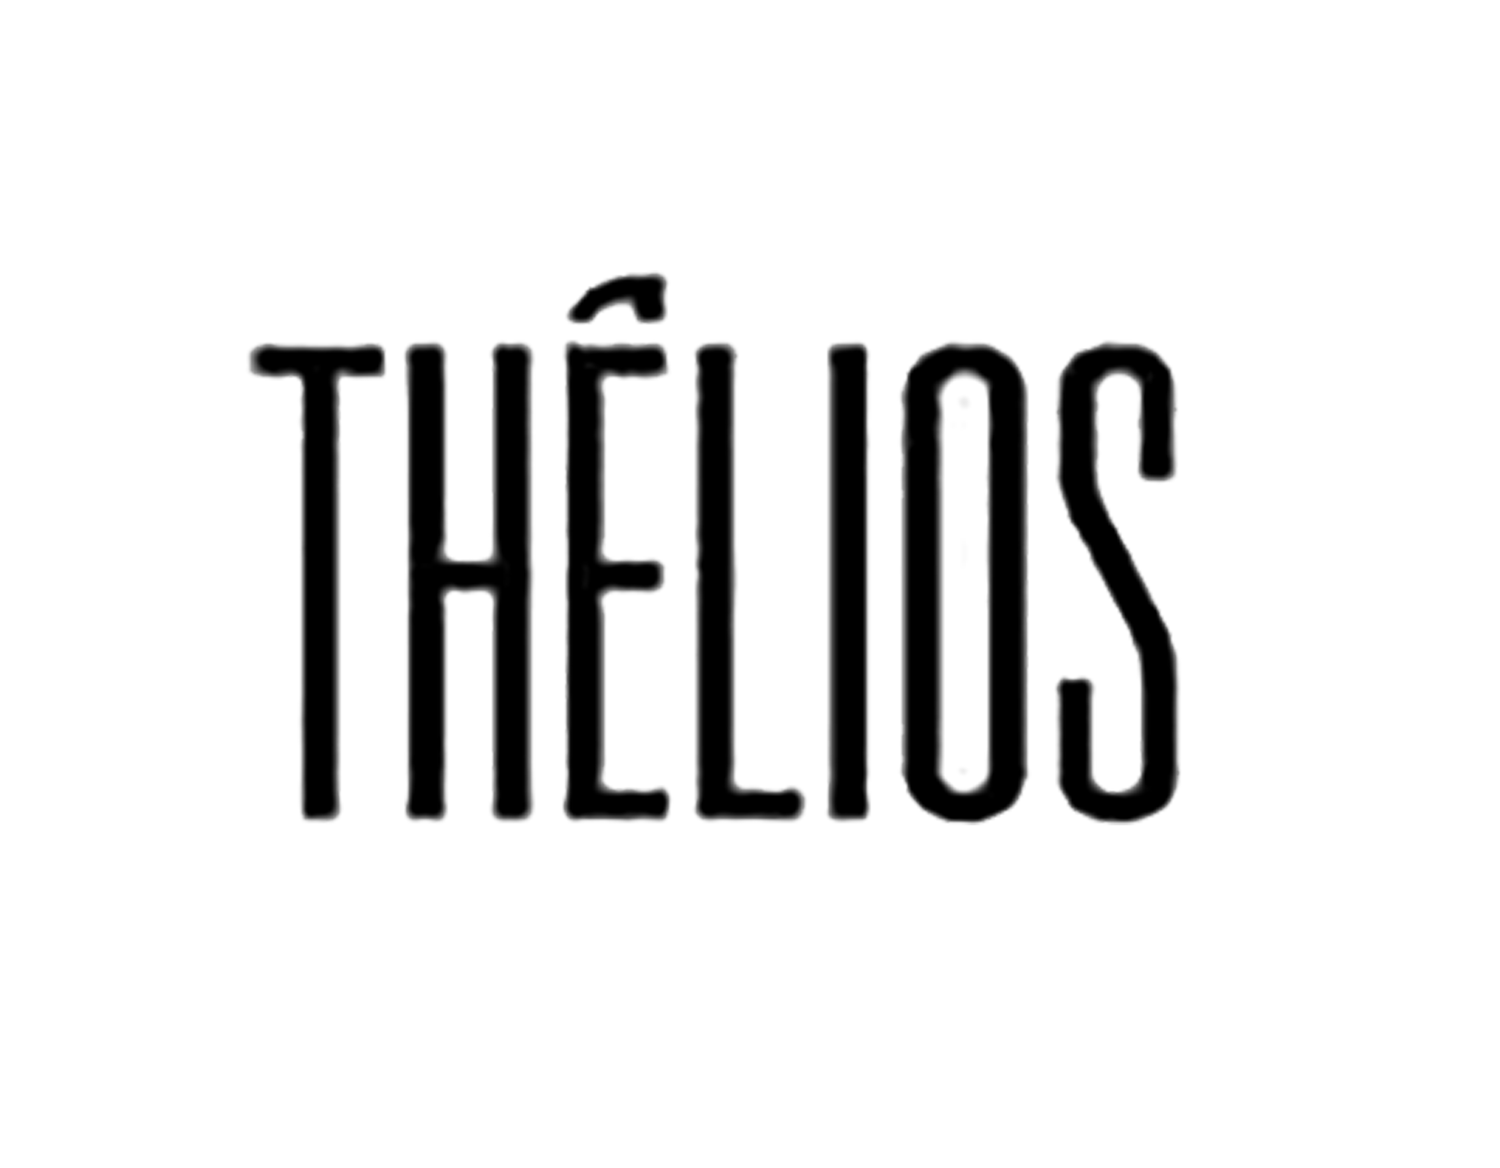 Fendi teams up with Thelios as LVMH focuses on eyewear